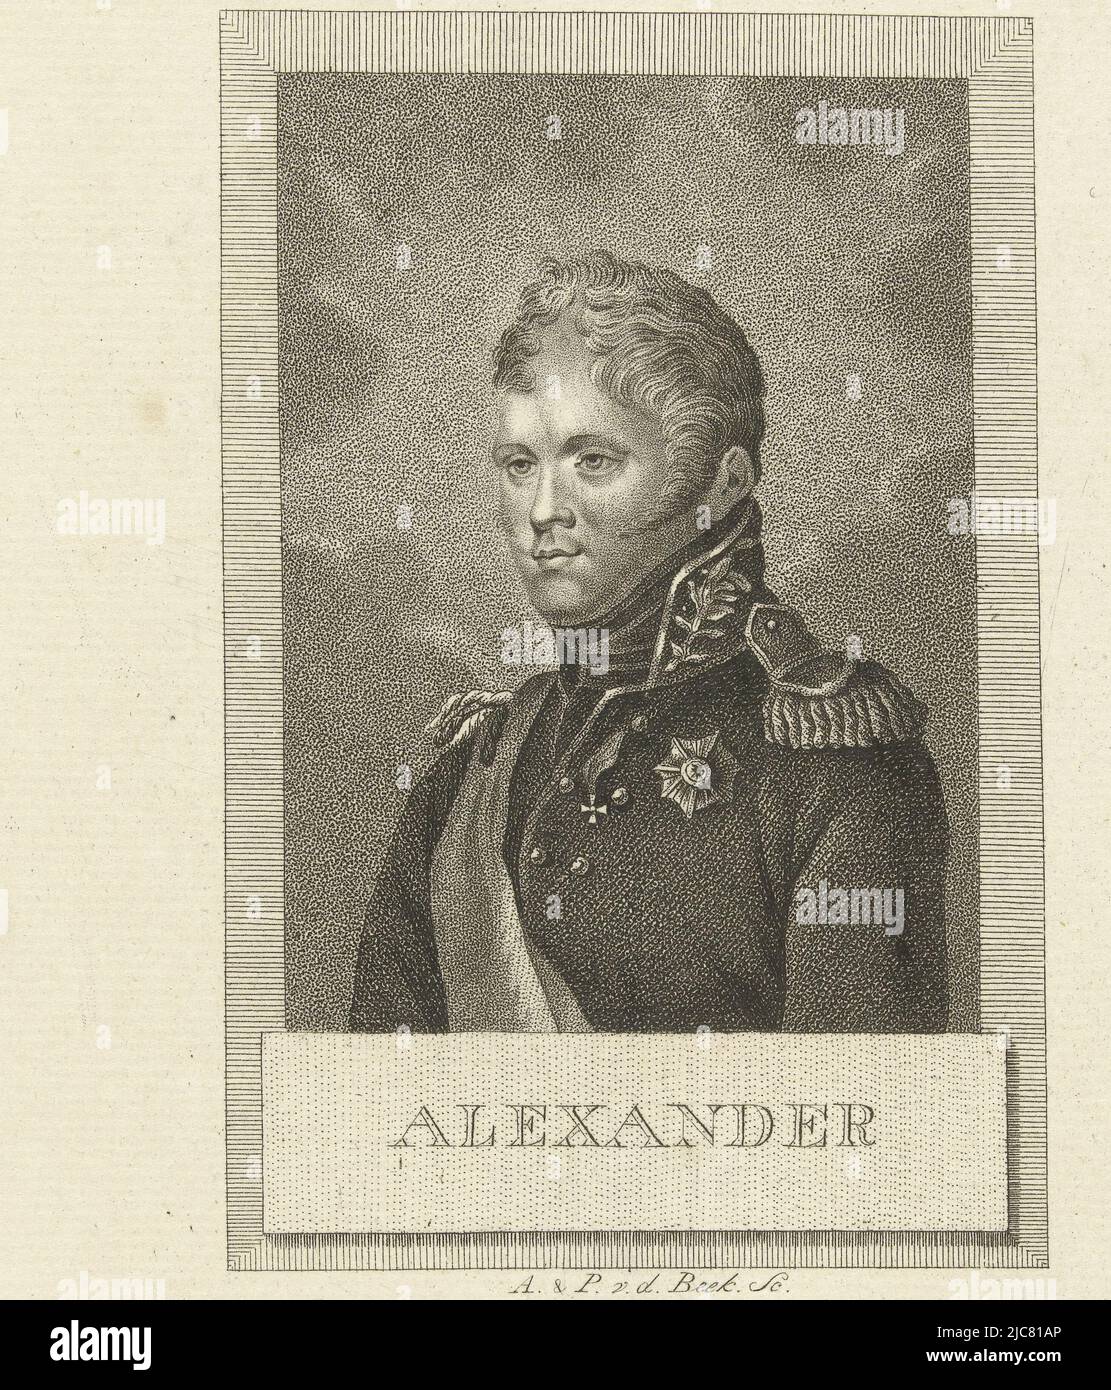 Portrait of Tsar Alexander I of Russia , print maker: Antonie en Pieter van der Beek, (mentioned on object), 1795 - 1821, paper, etching, h 212 mm × w 135 mm Stock Photo